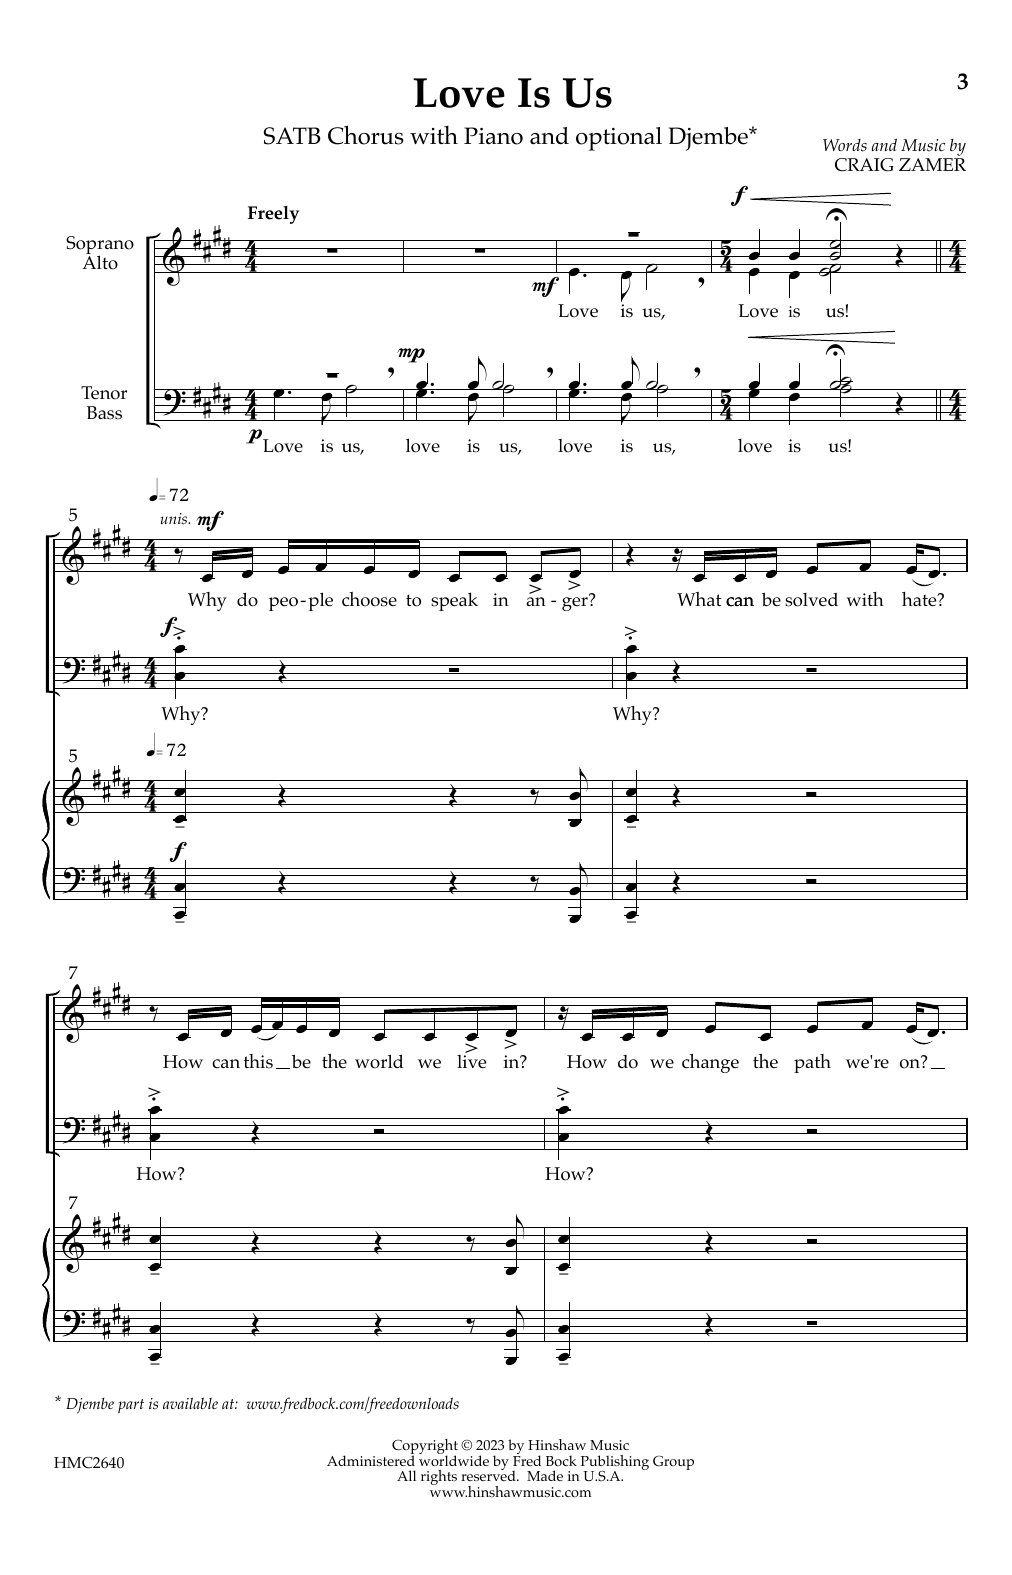 Craig Zamer Love Is Us sheet music notes and chords arranged for SATB Choir